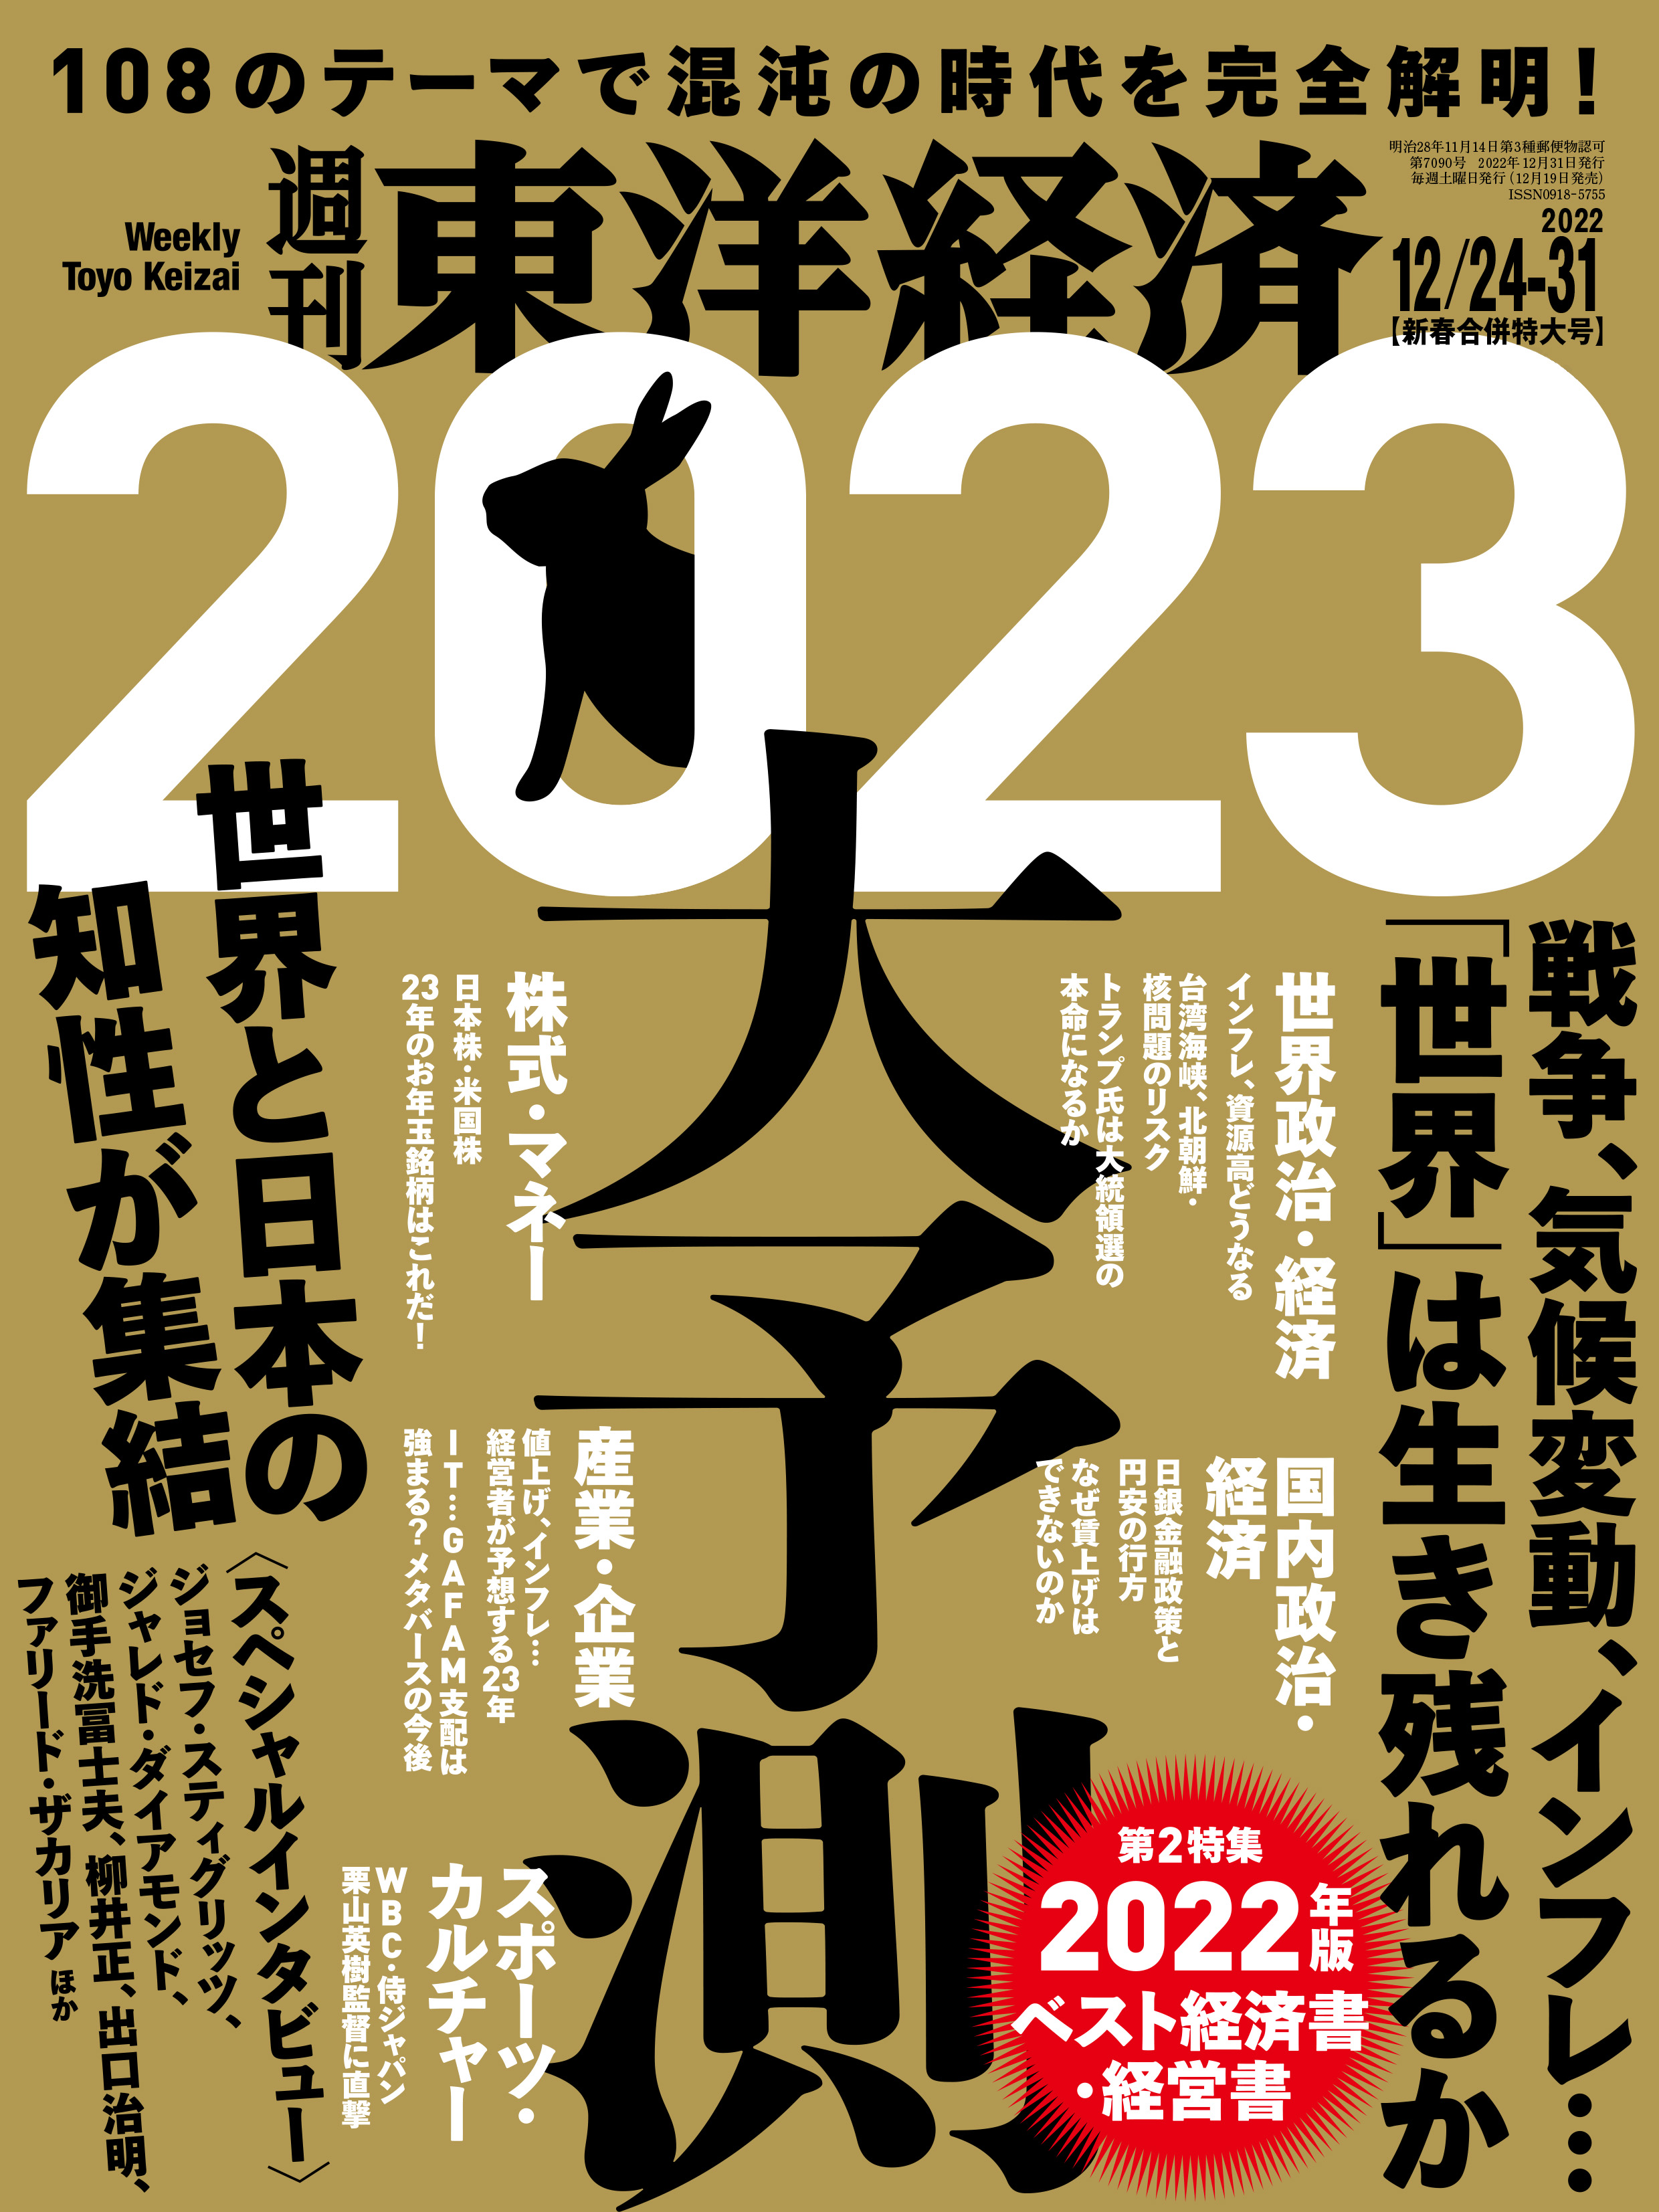 週刊東洋経済 2022/12/24-31新春合併特大号 - - 漫画・無料試し読み